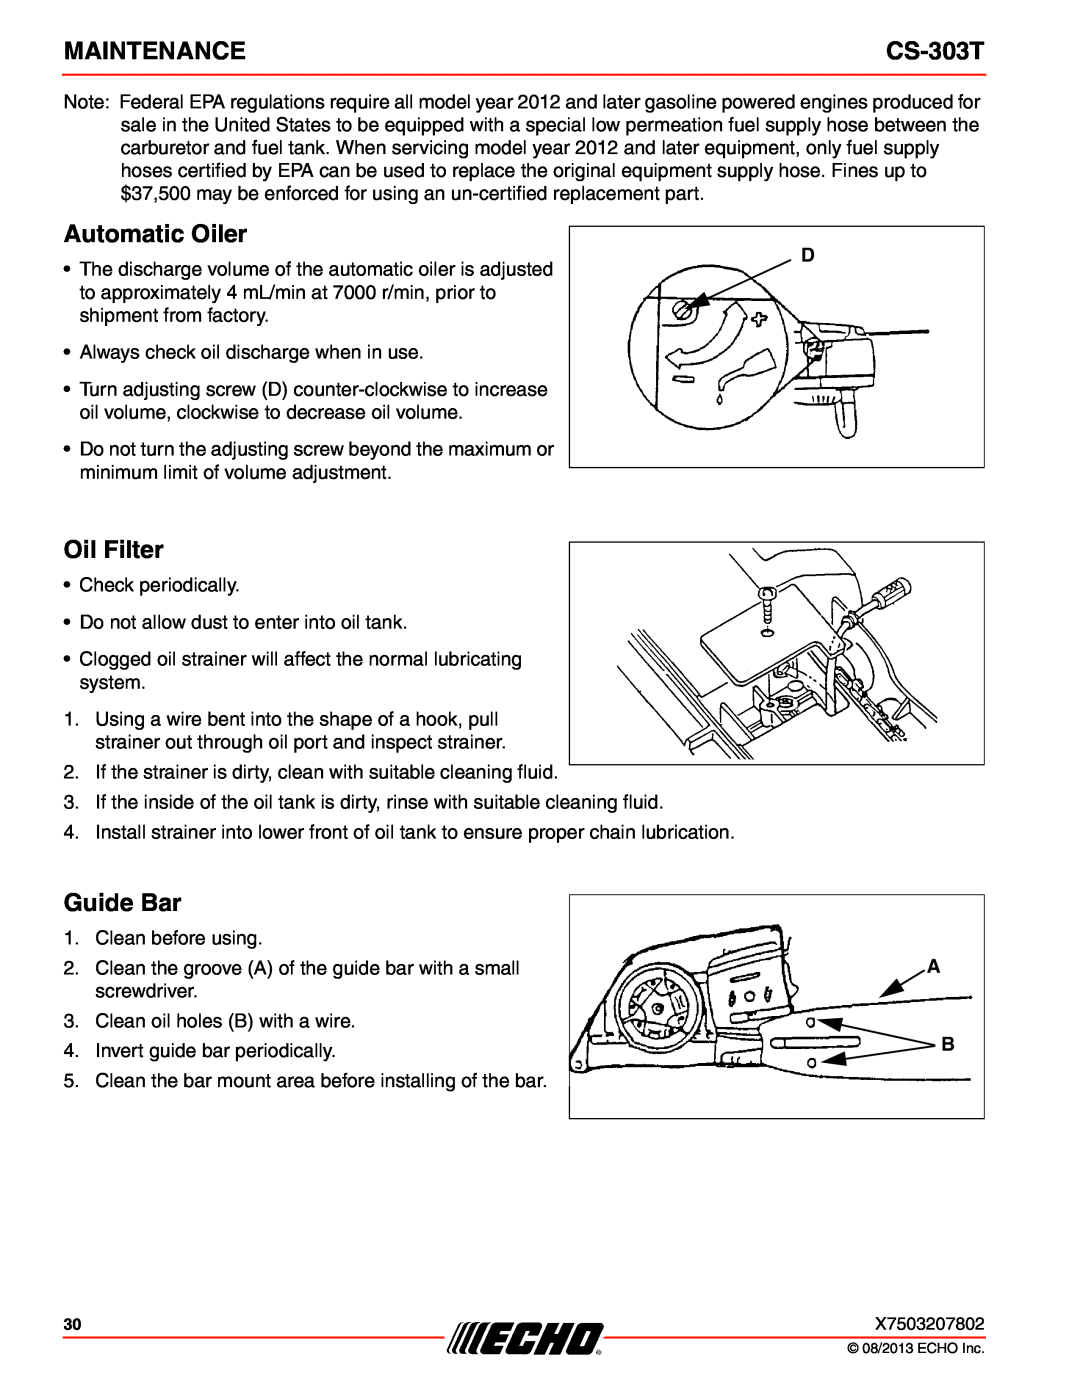 Echo CS-303T instruction manual Automatic Oiler, Oil Filter, Maintenance, Guide Bar 